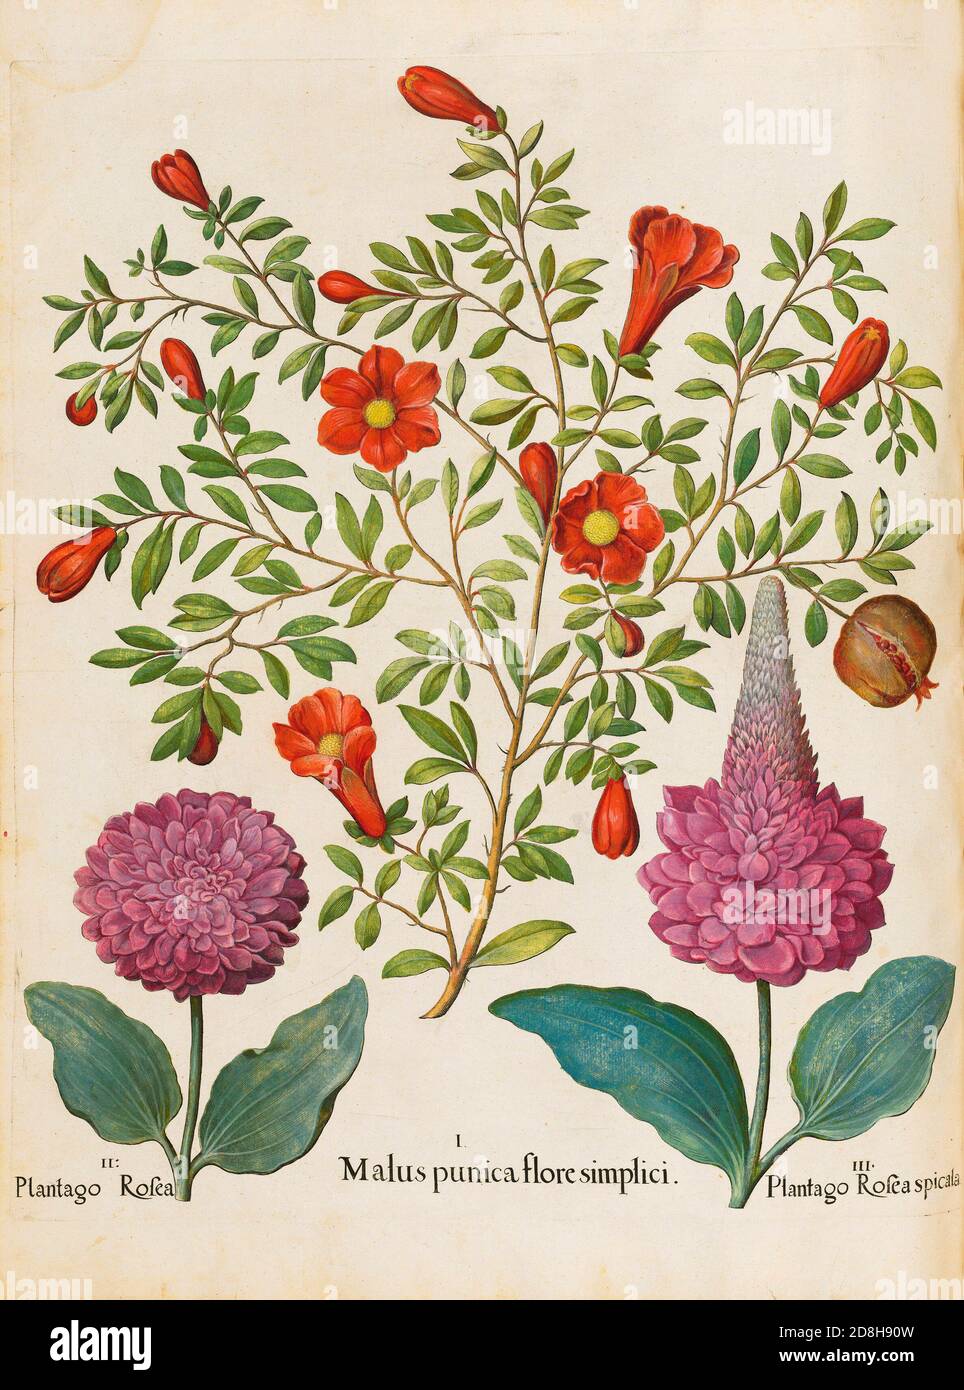 Matus Punica Flore Simplici, Basil Besler, botanical illustration by Basil Besler from the The Hortus Eystettensis, produced by Basilius Besler 1613. Stock Photo